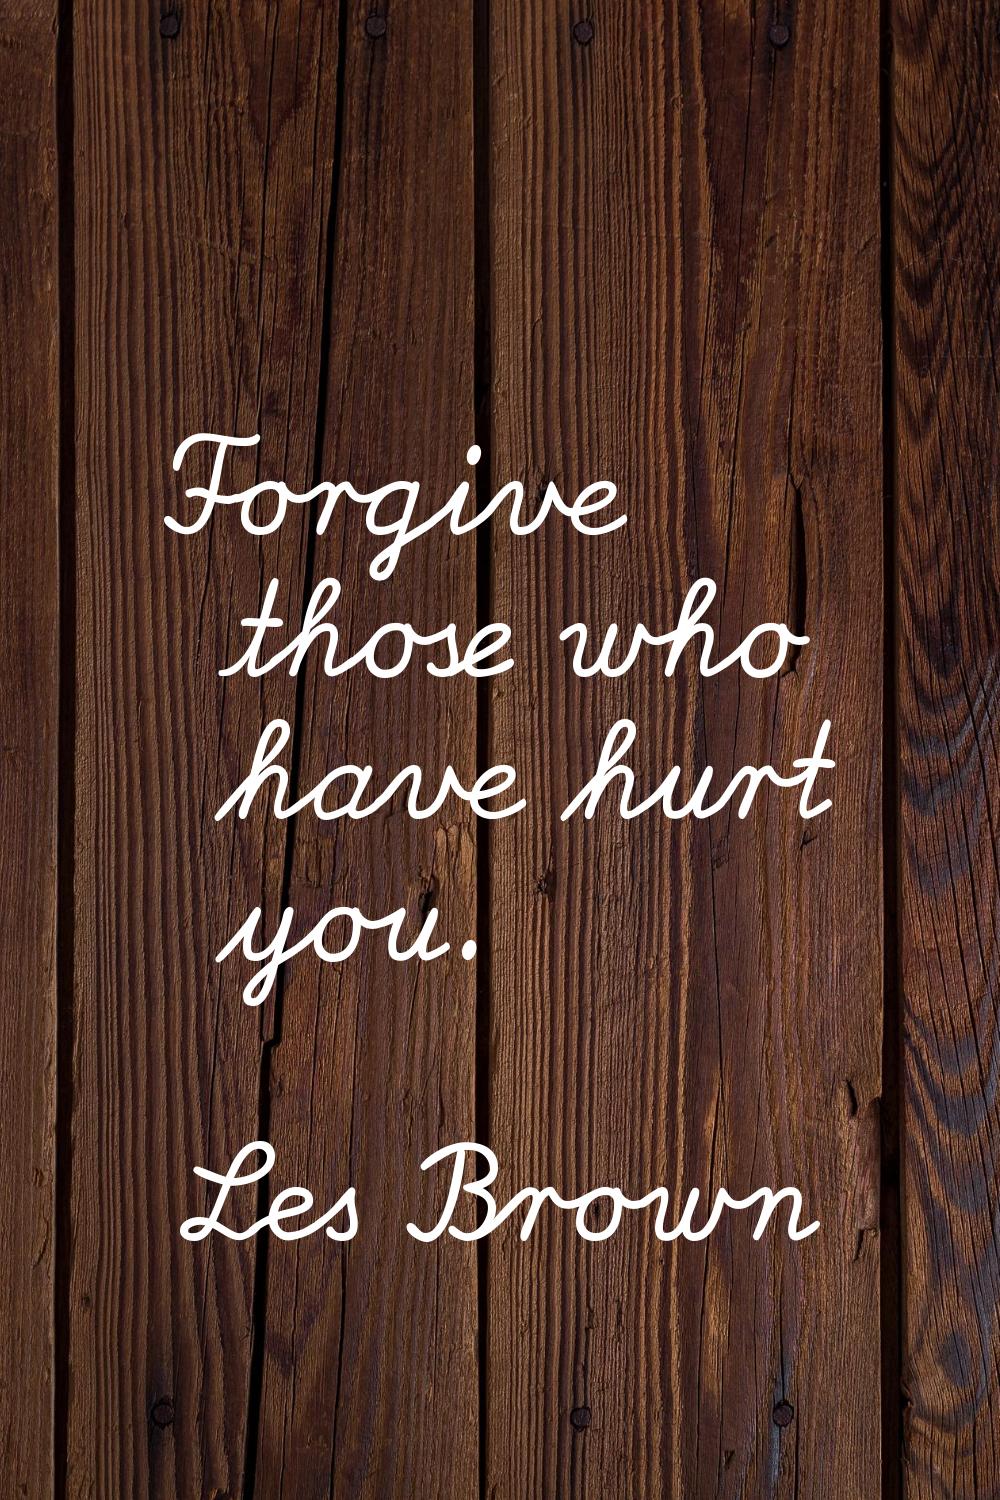 Forgive those who have hurt you.